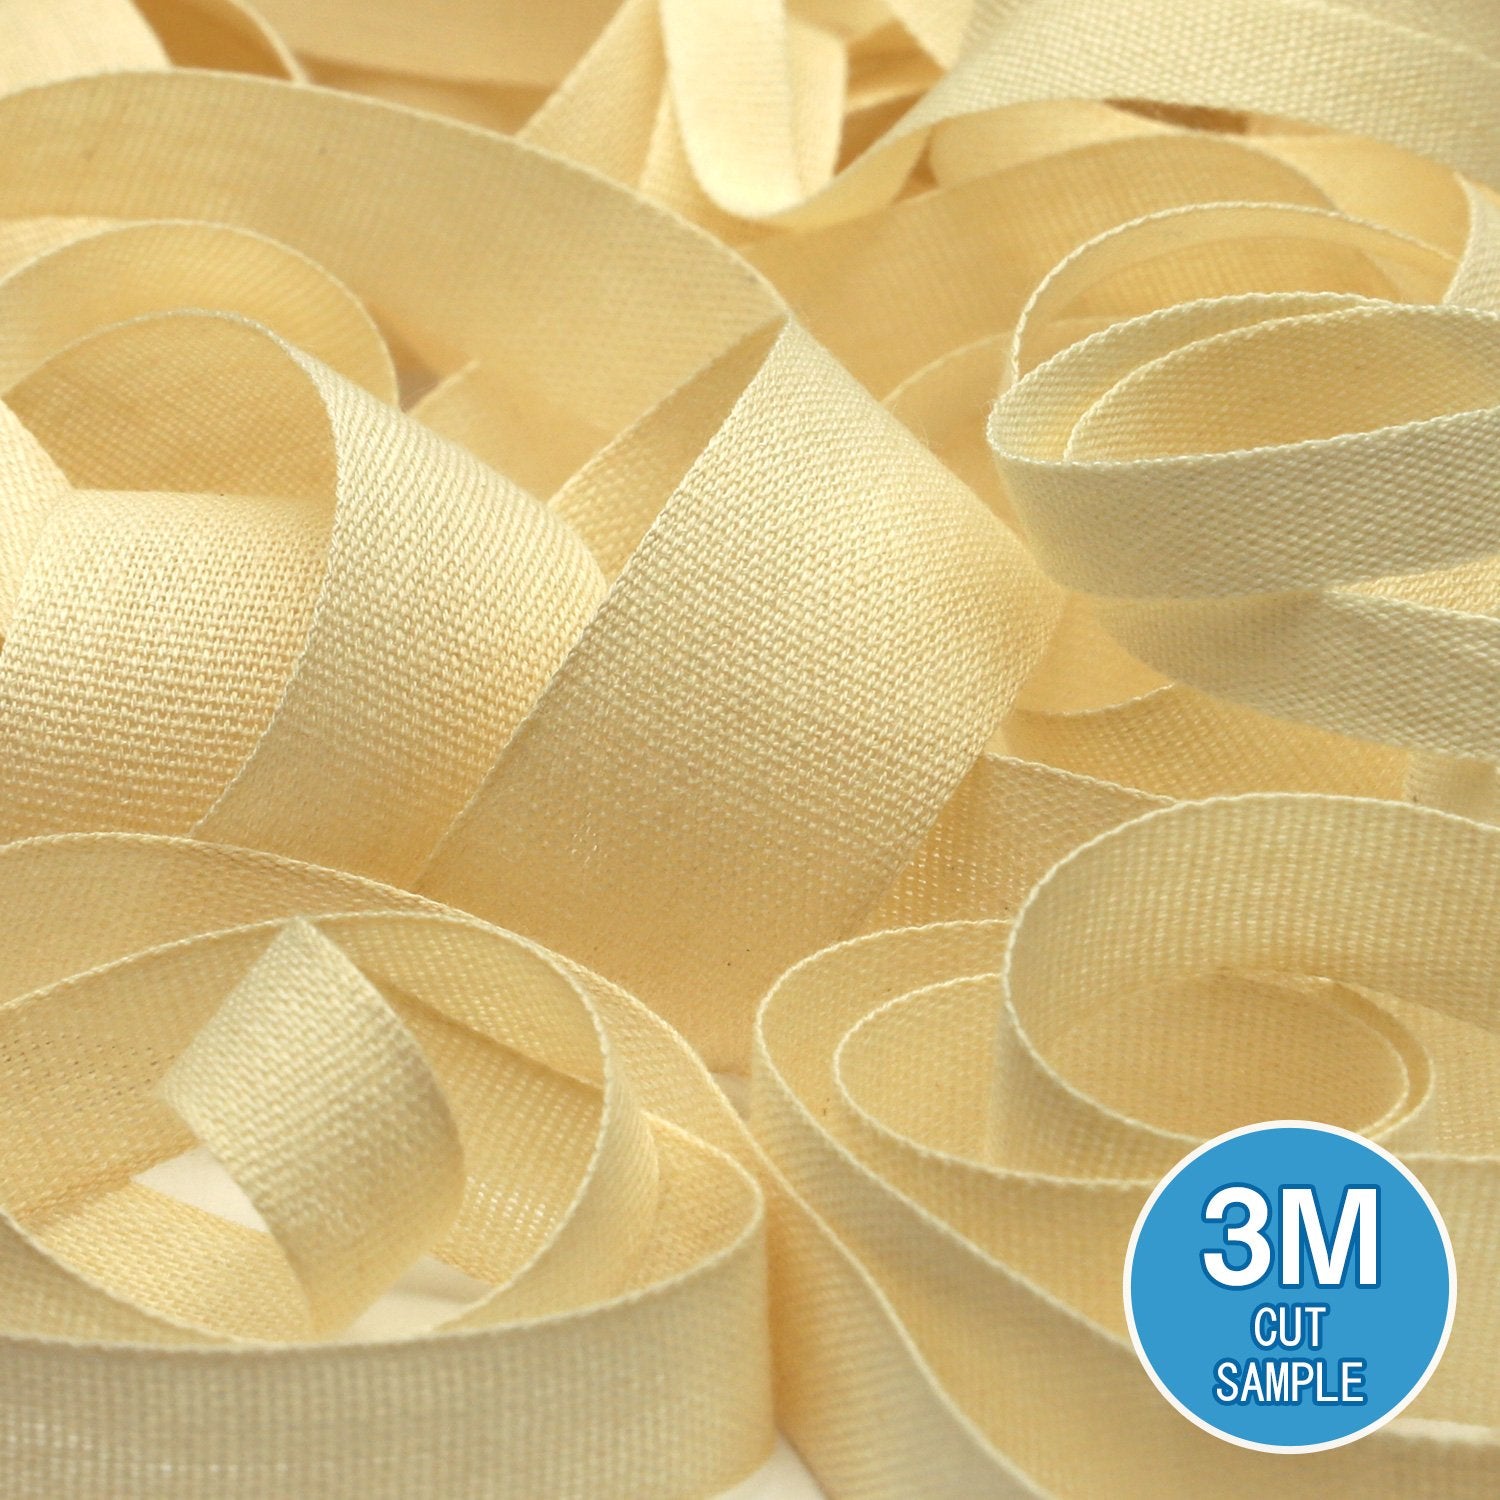 FUJIYAMA RIBBON [Sample] Organic Cotton Taffeta Ribbon (FY-464) 4mm Ecru 3 Meters Cut